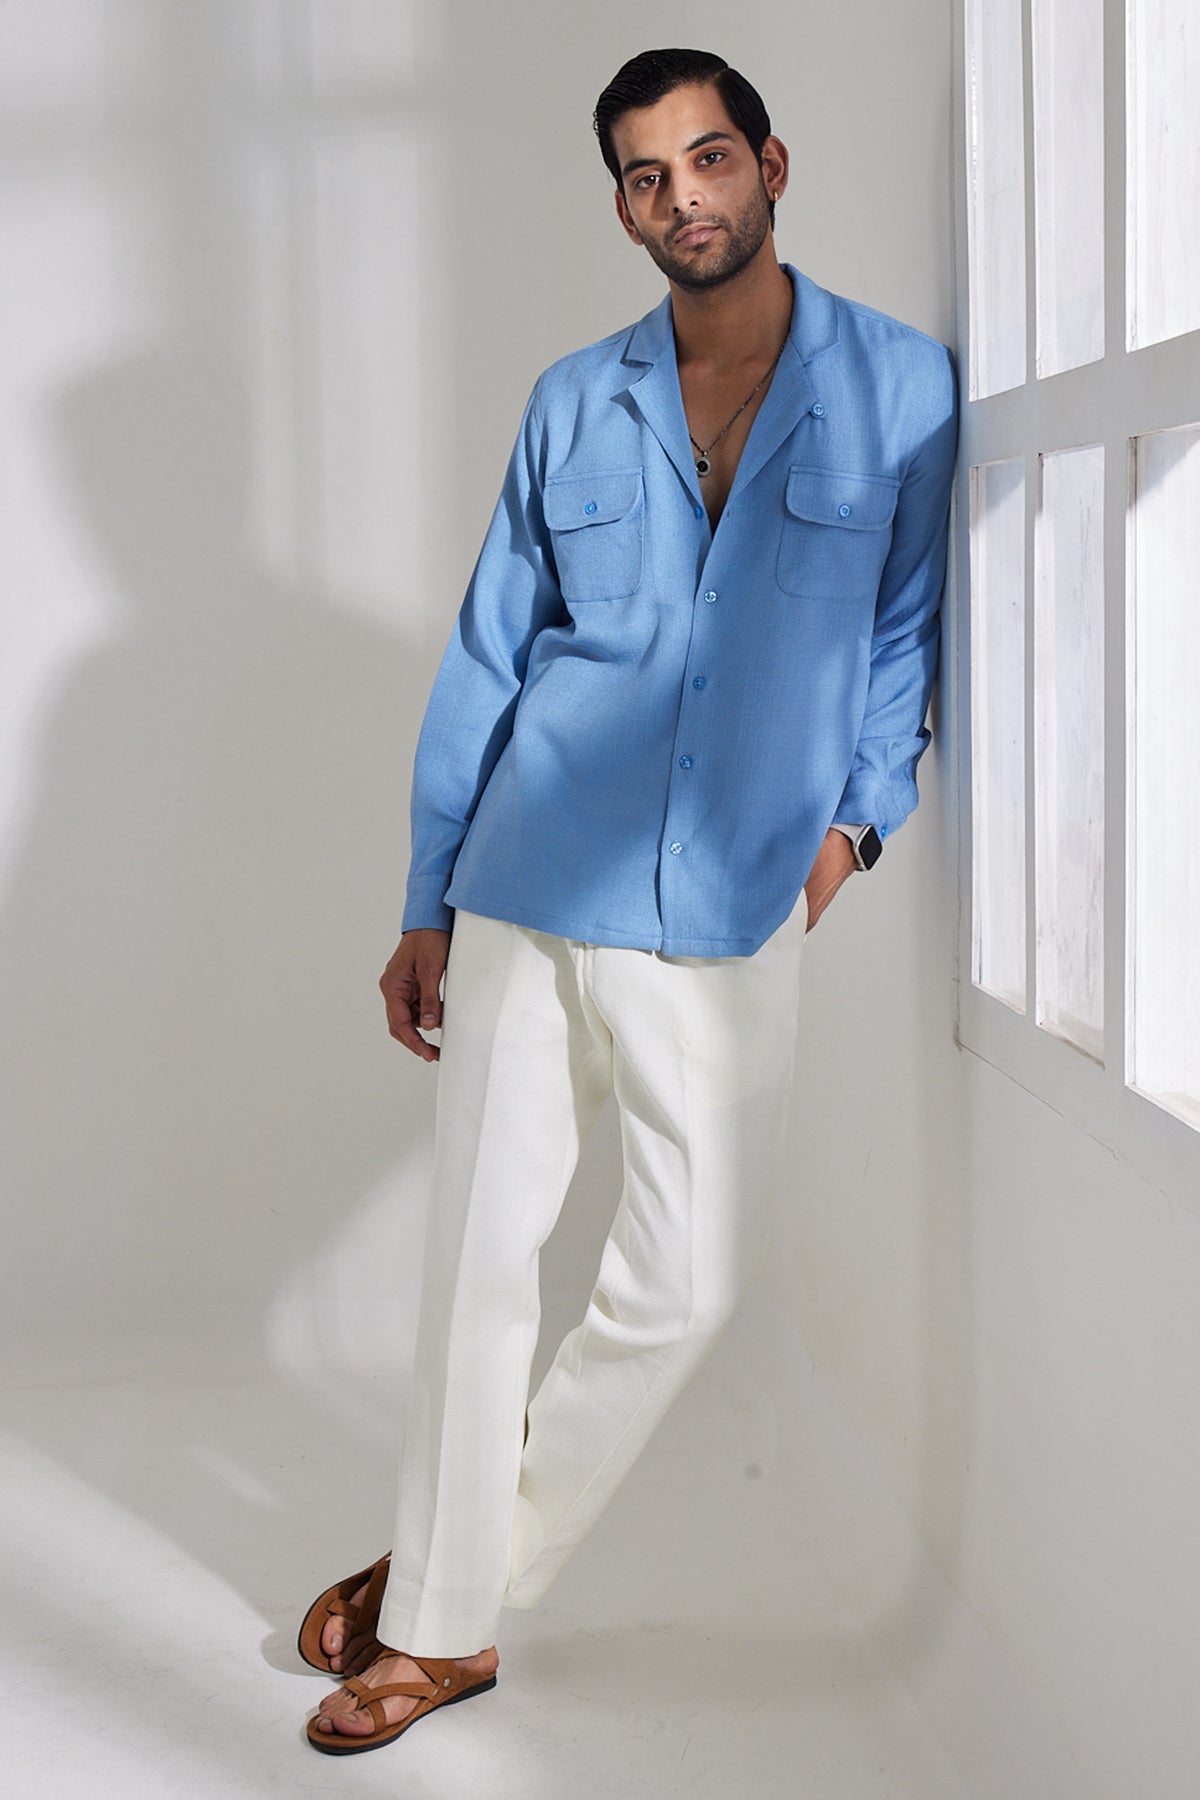 Men's Guide to Matching Pant Shirt Color Combination - LooksGud.com |  Summer business attire, White pants men, Pink dress shirt